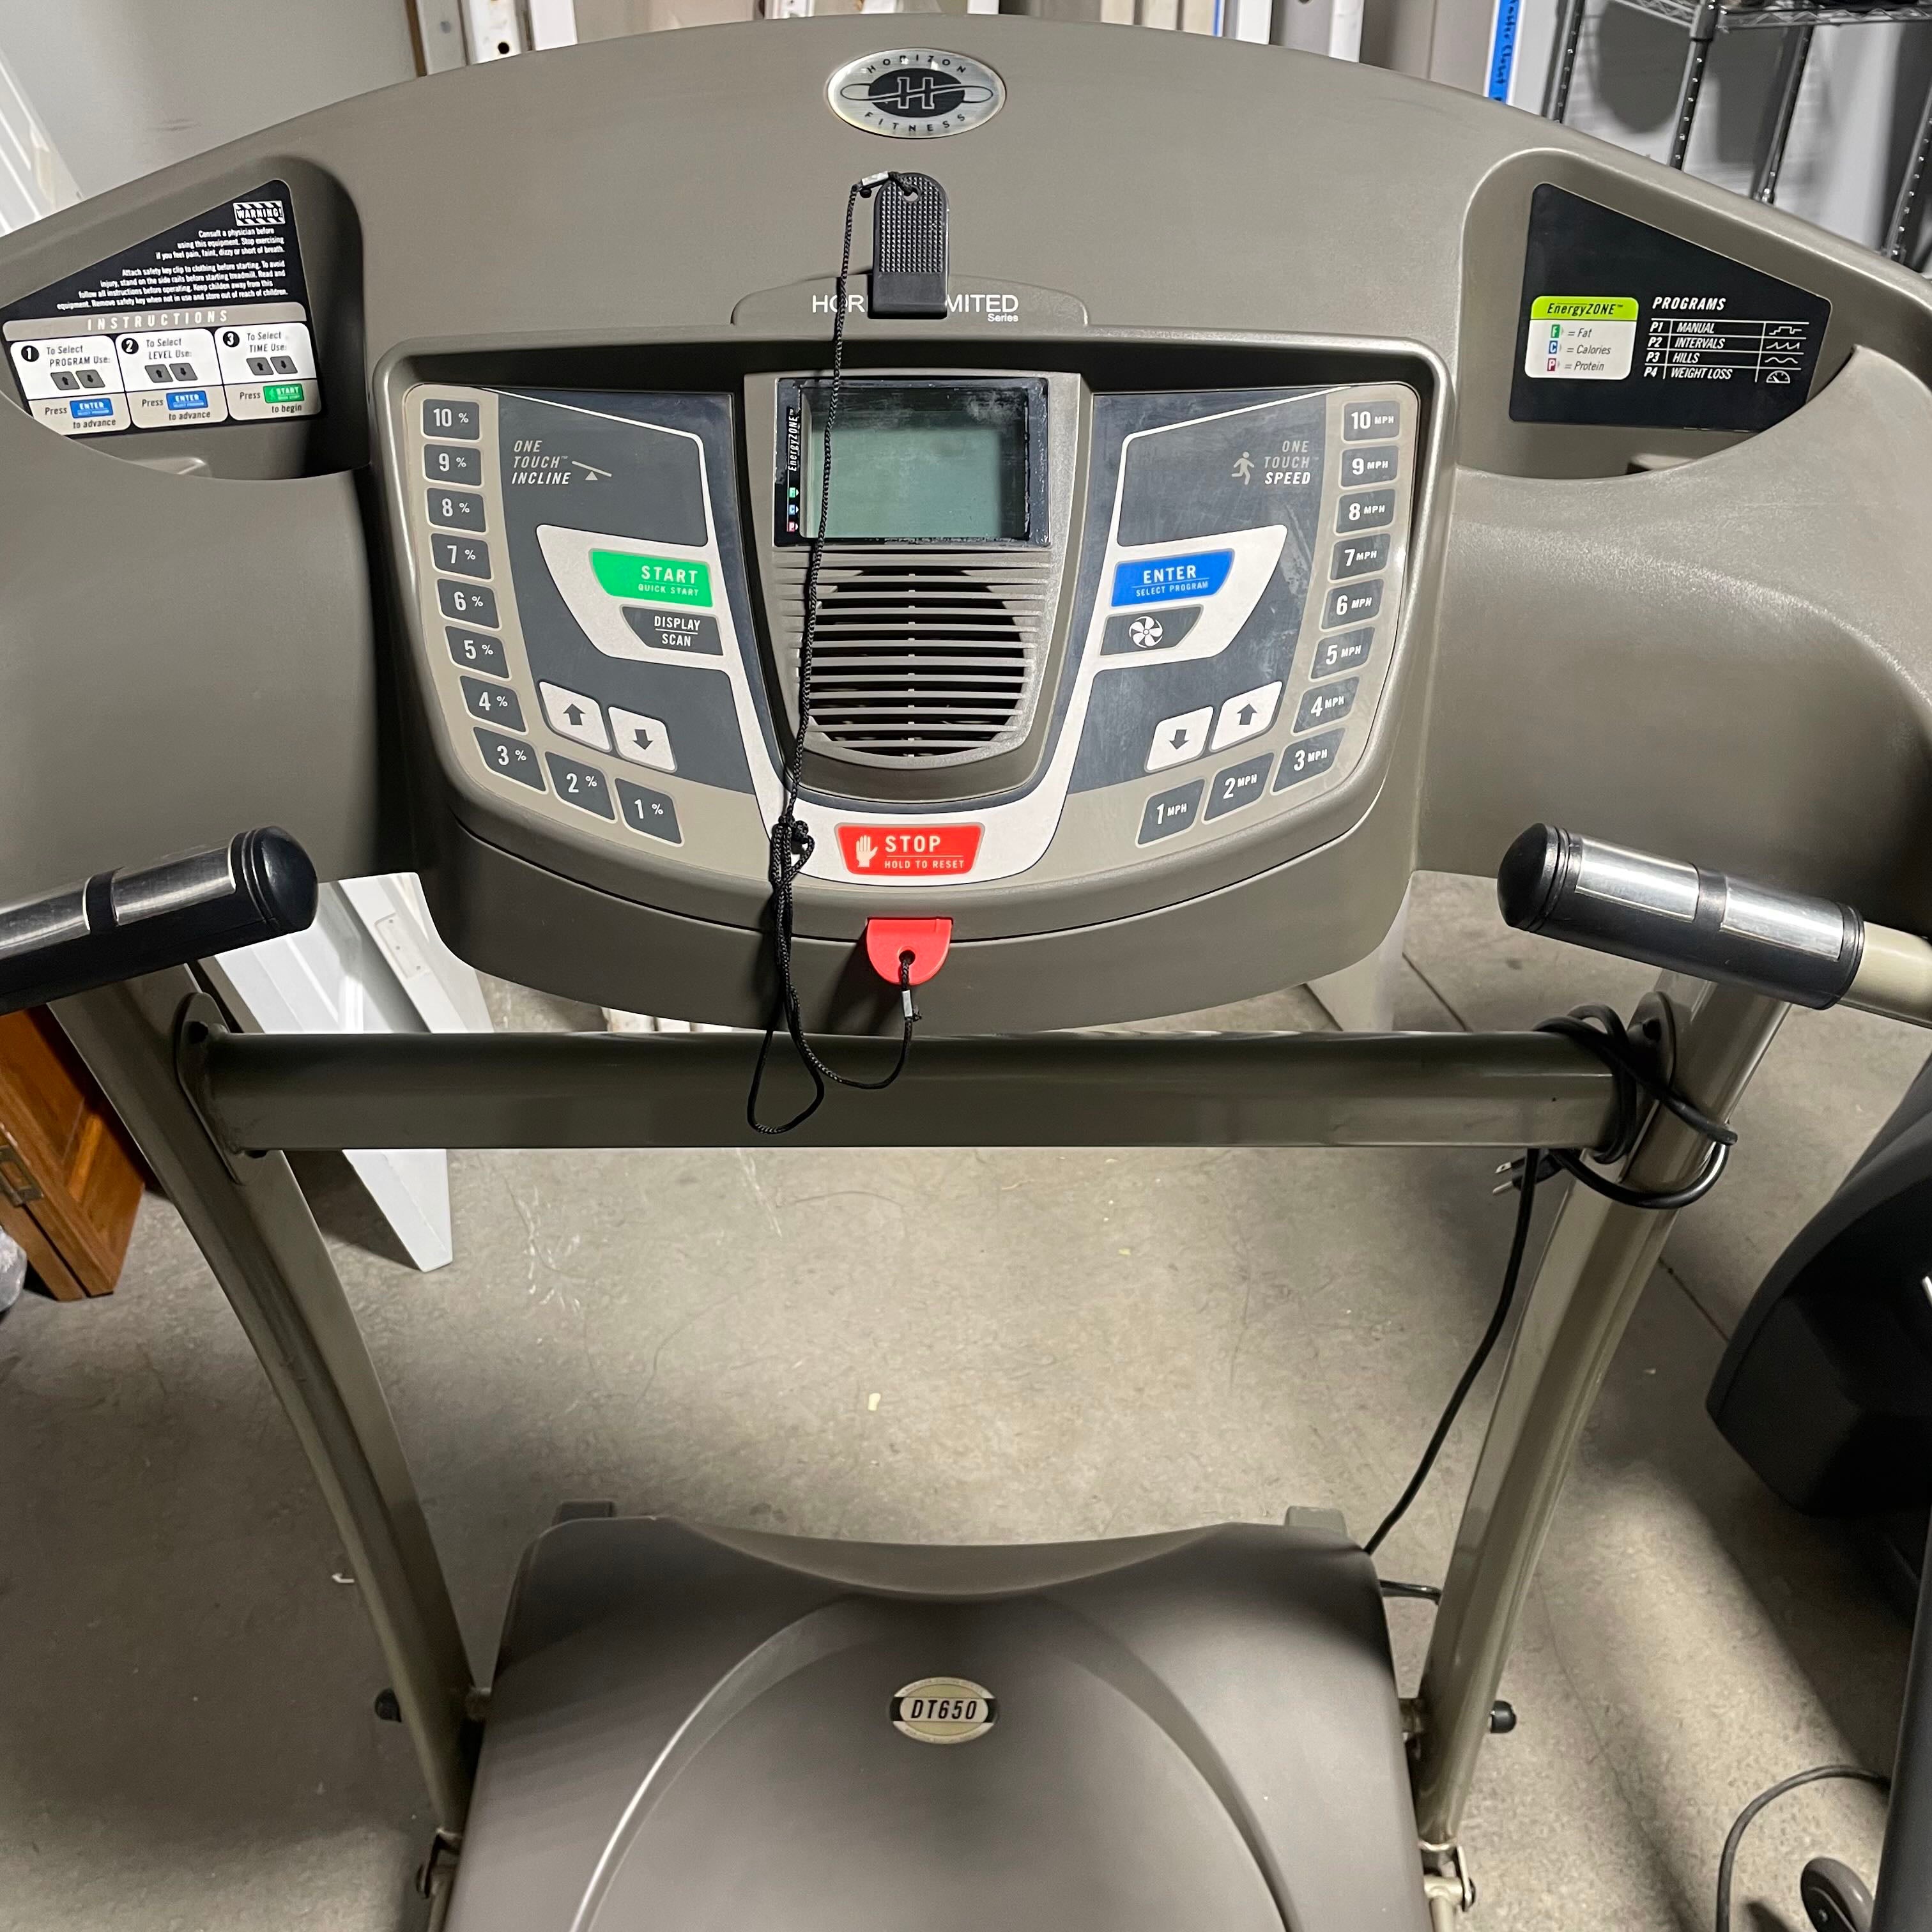 34"x 67"x 57" Horizon Fitness Treadmill